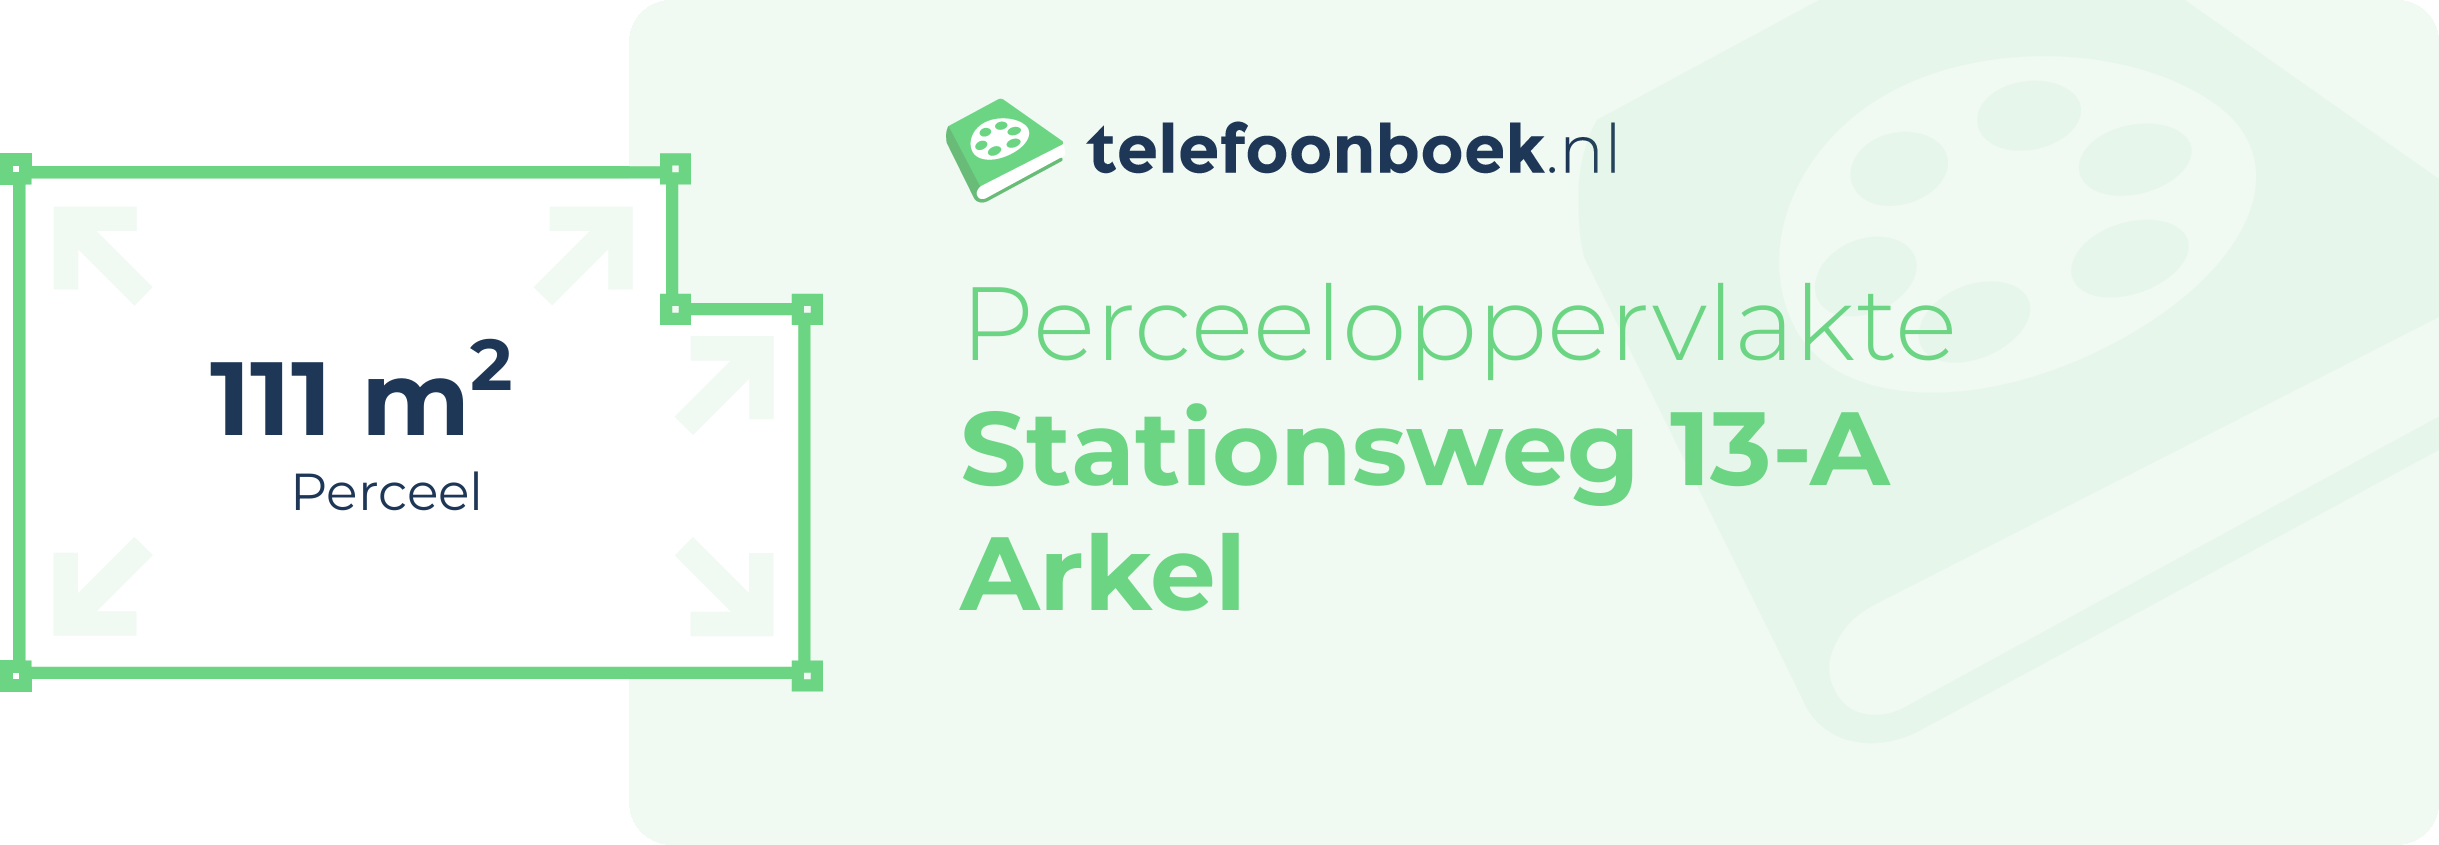 Perceeloppervlakte Stationsweg 13-A Arkel